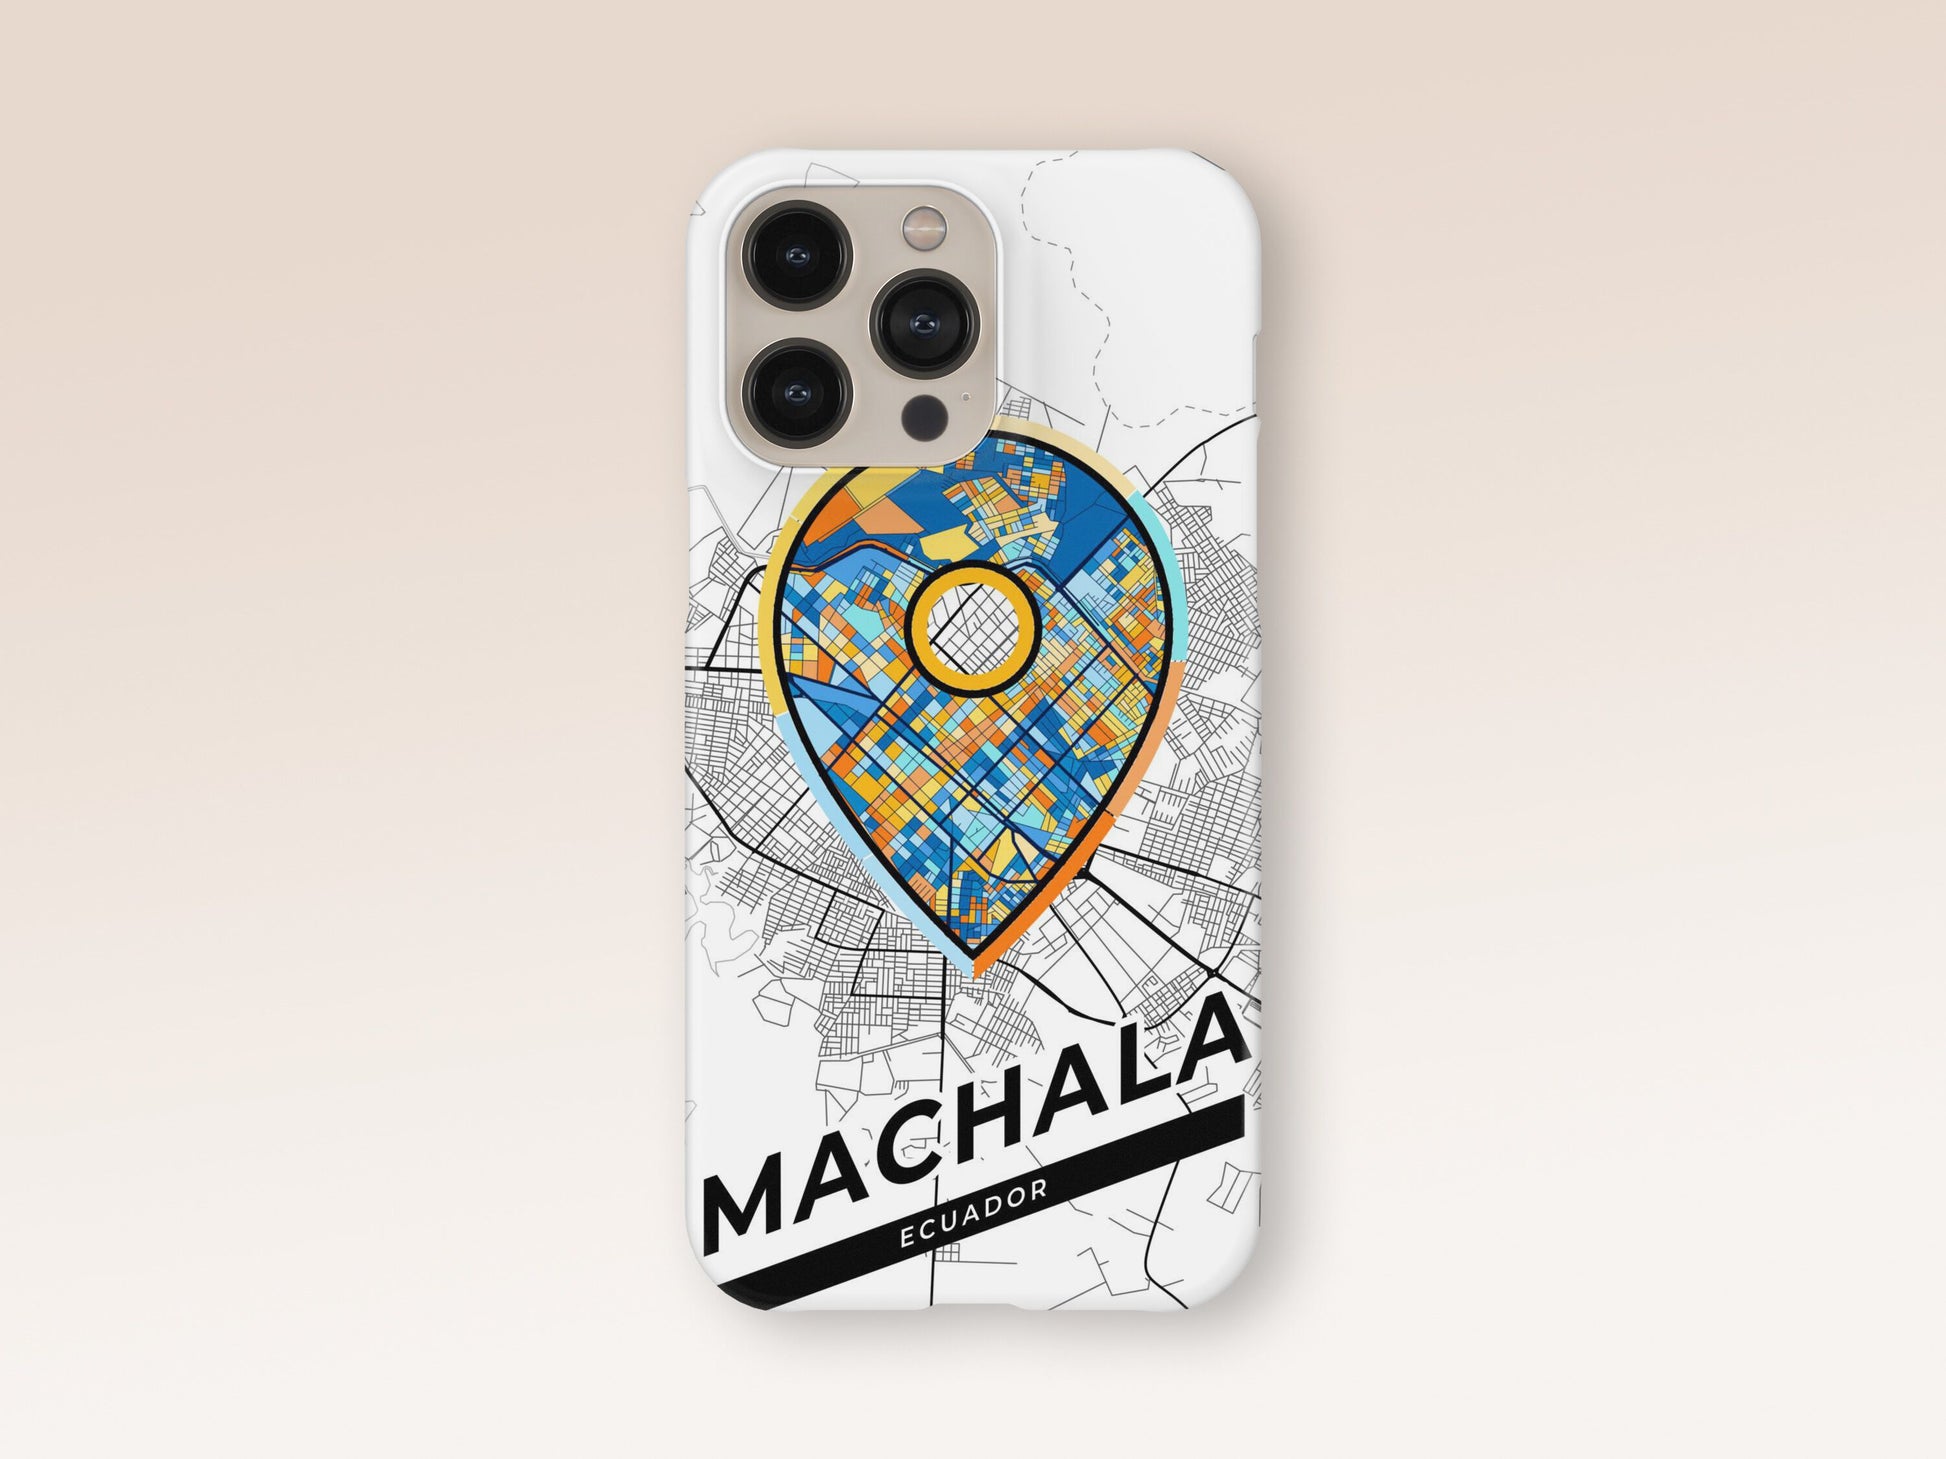 Machala Ecuador slim phone case with colorful icon. Birthday, wedding or housewarming gift. Couple match cases. 1